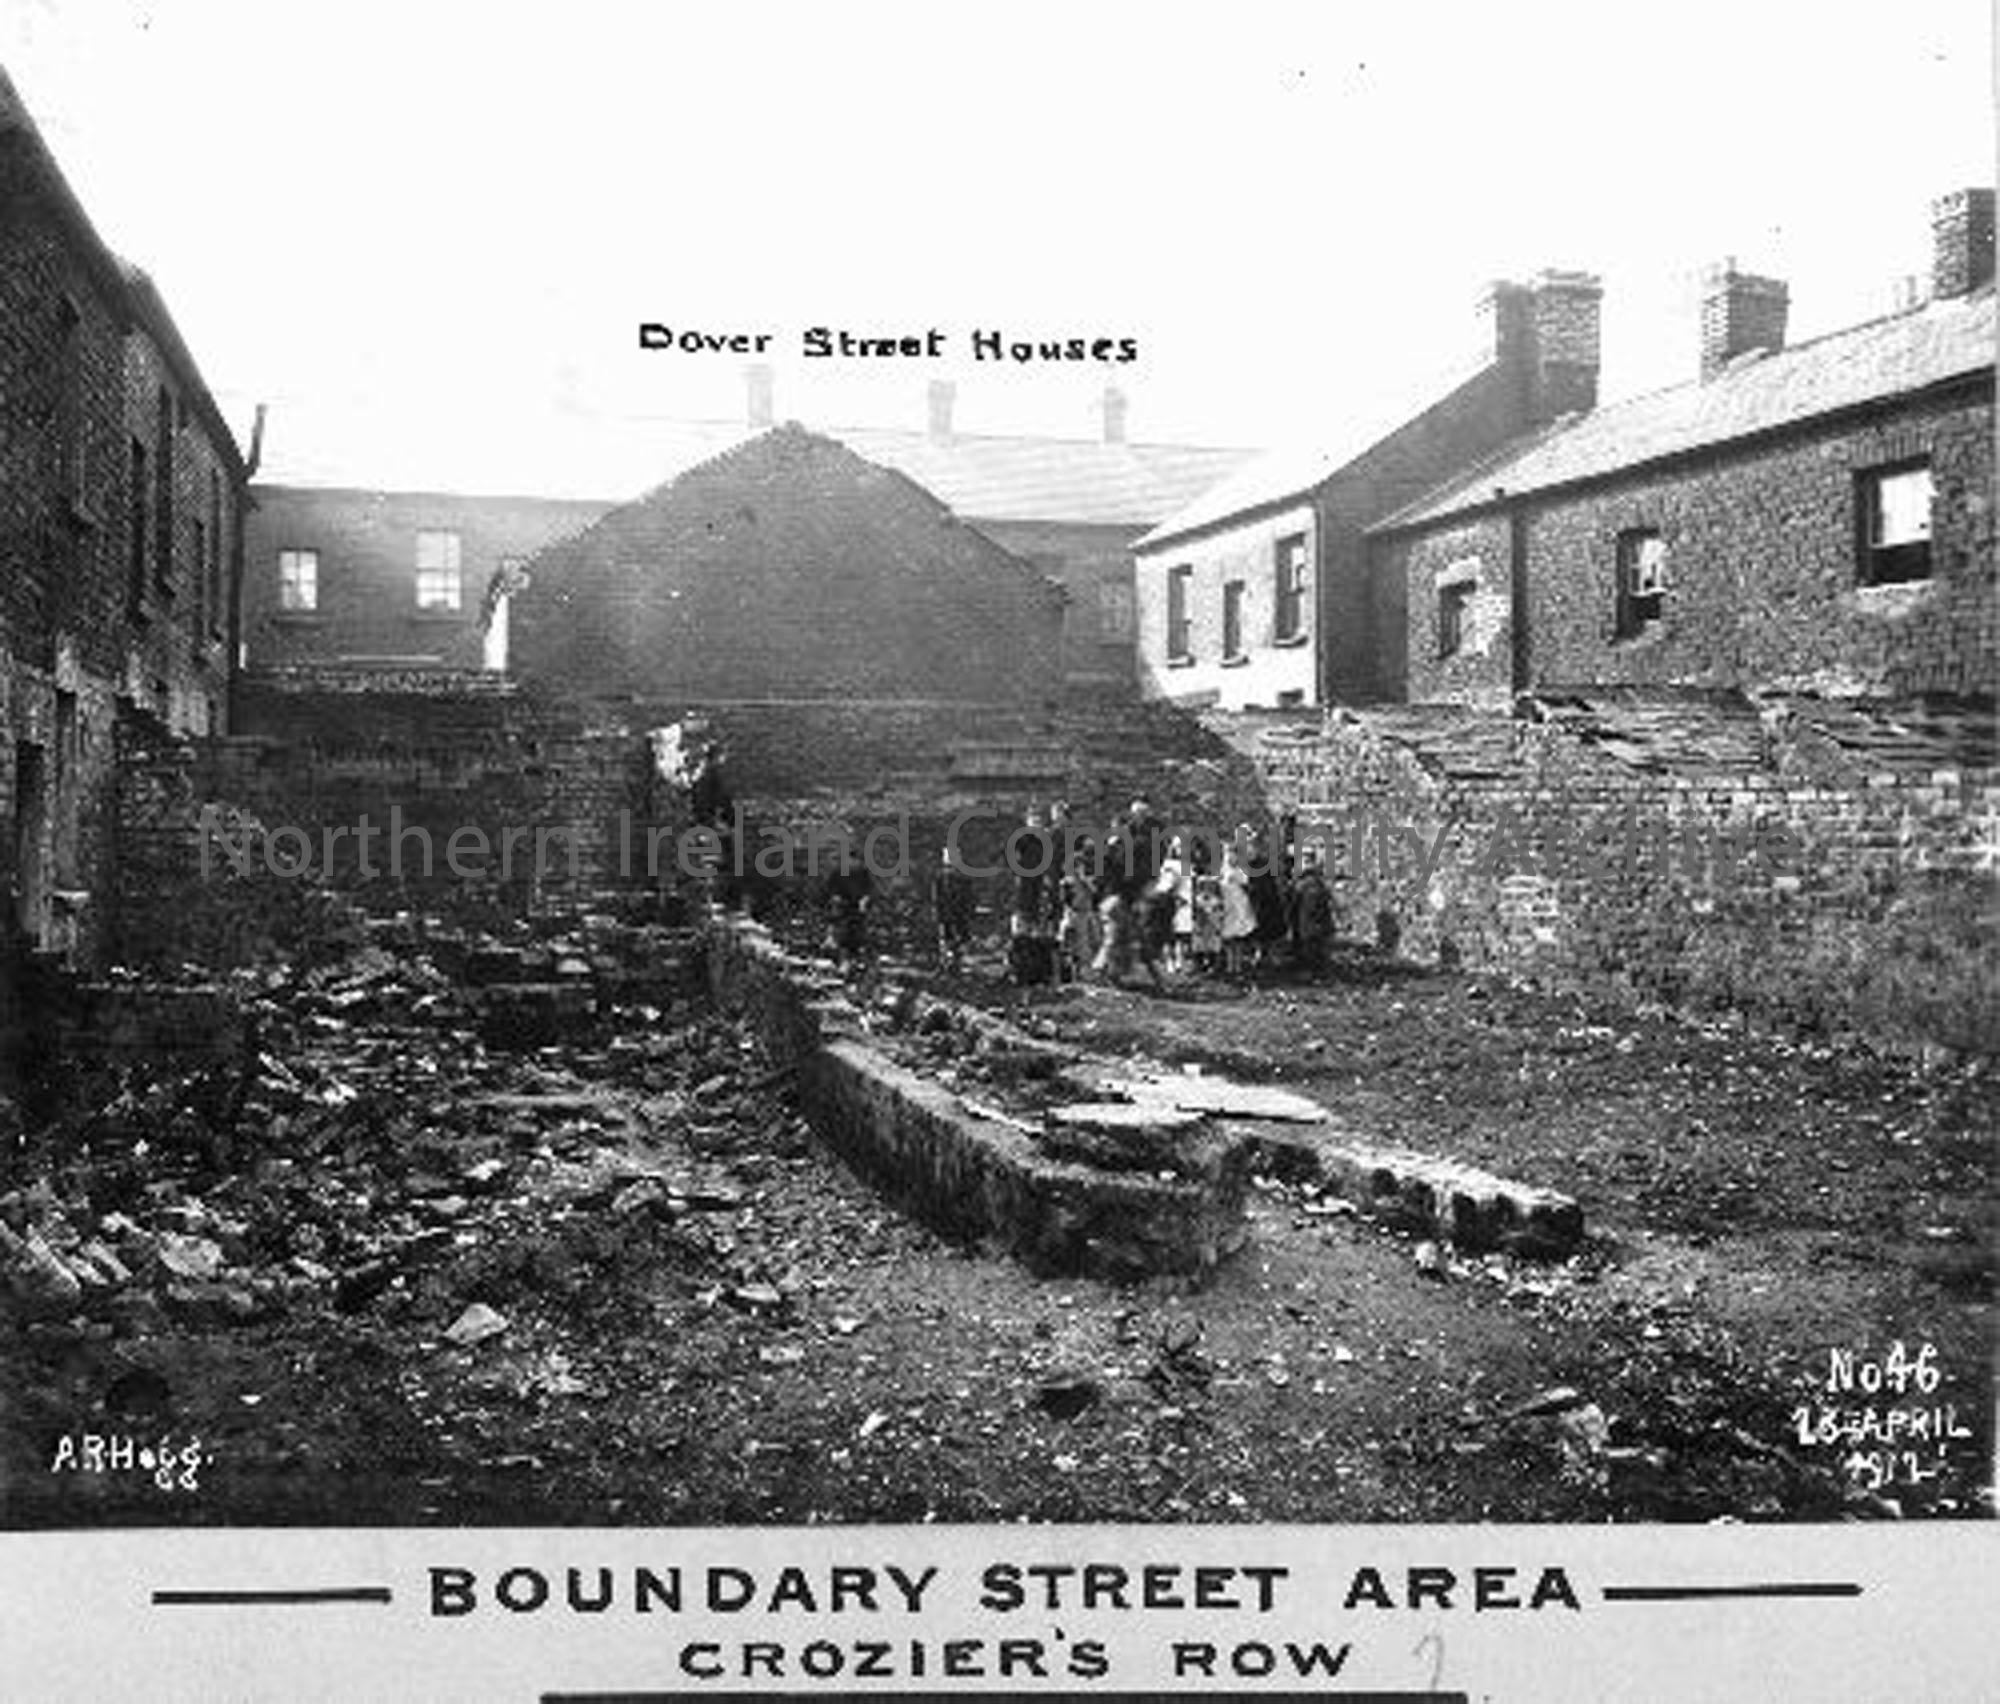 Boundary Street Area – Croziers Row (4000)